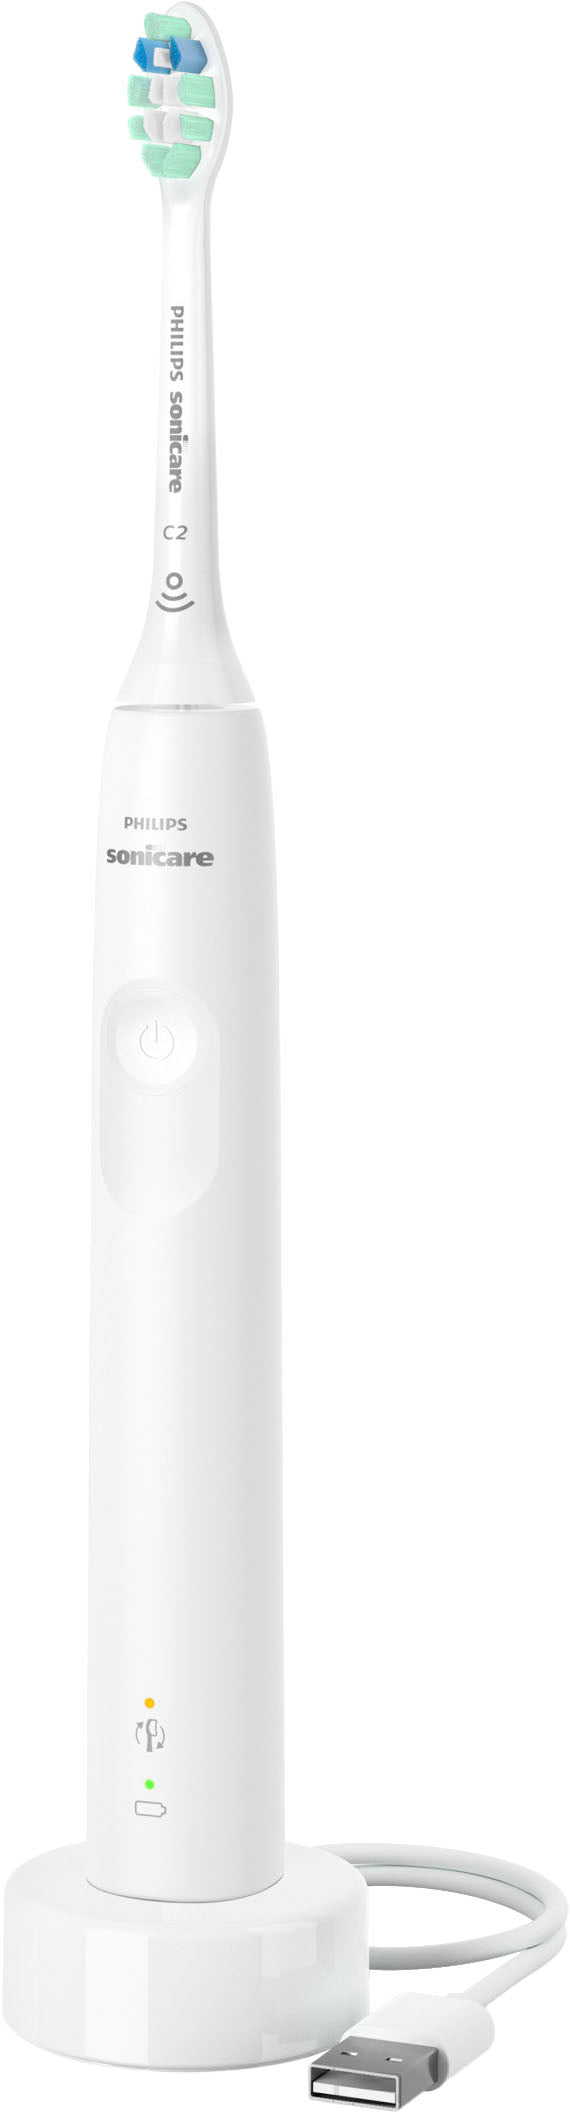 Philips Sonicare 4100 Power Toothbrush - White_3